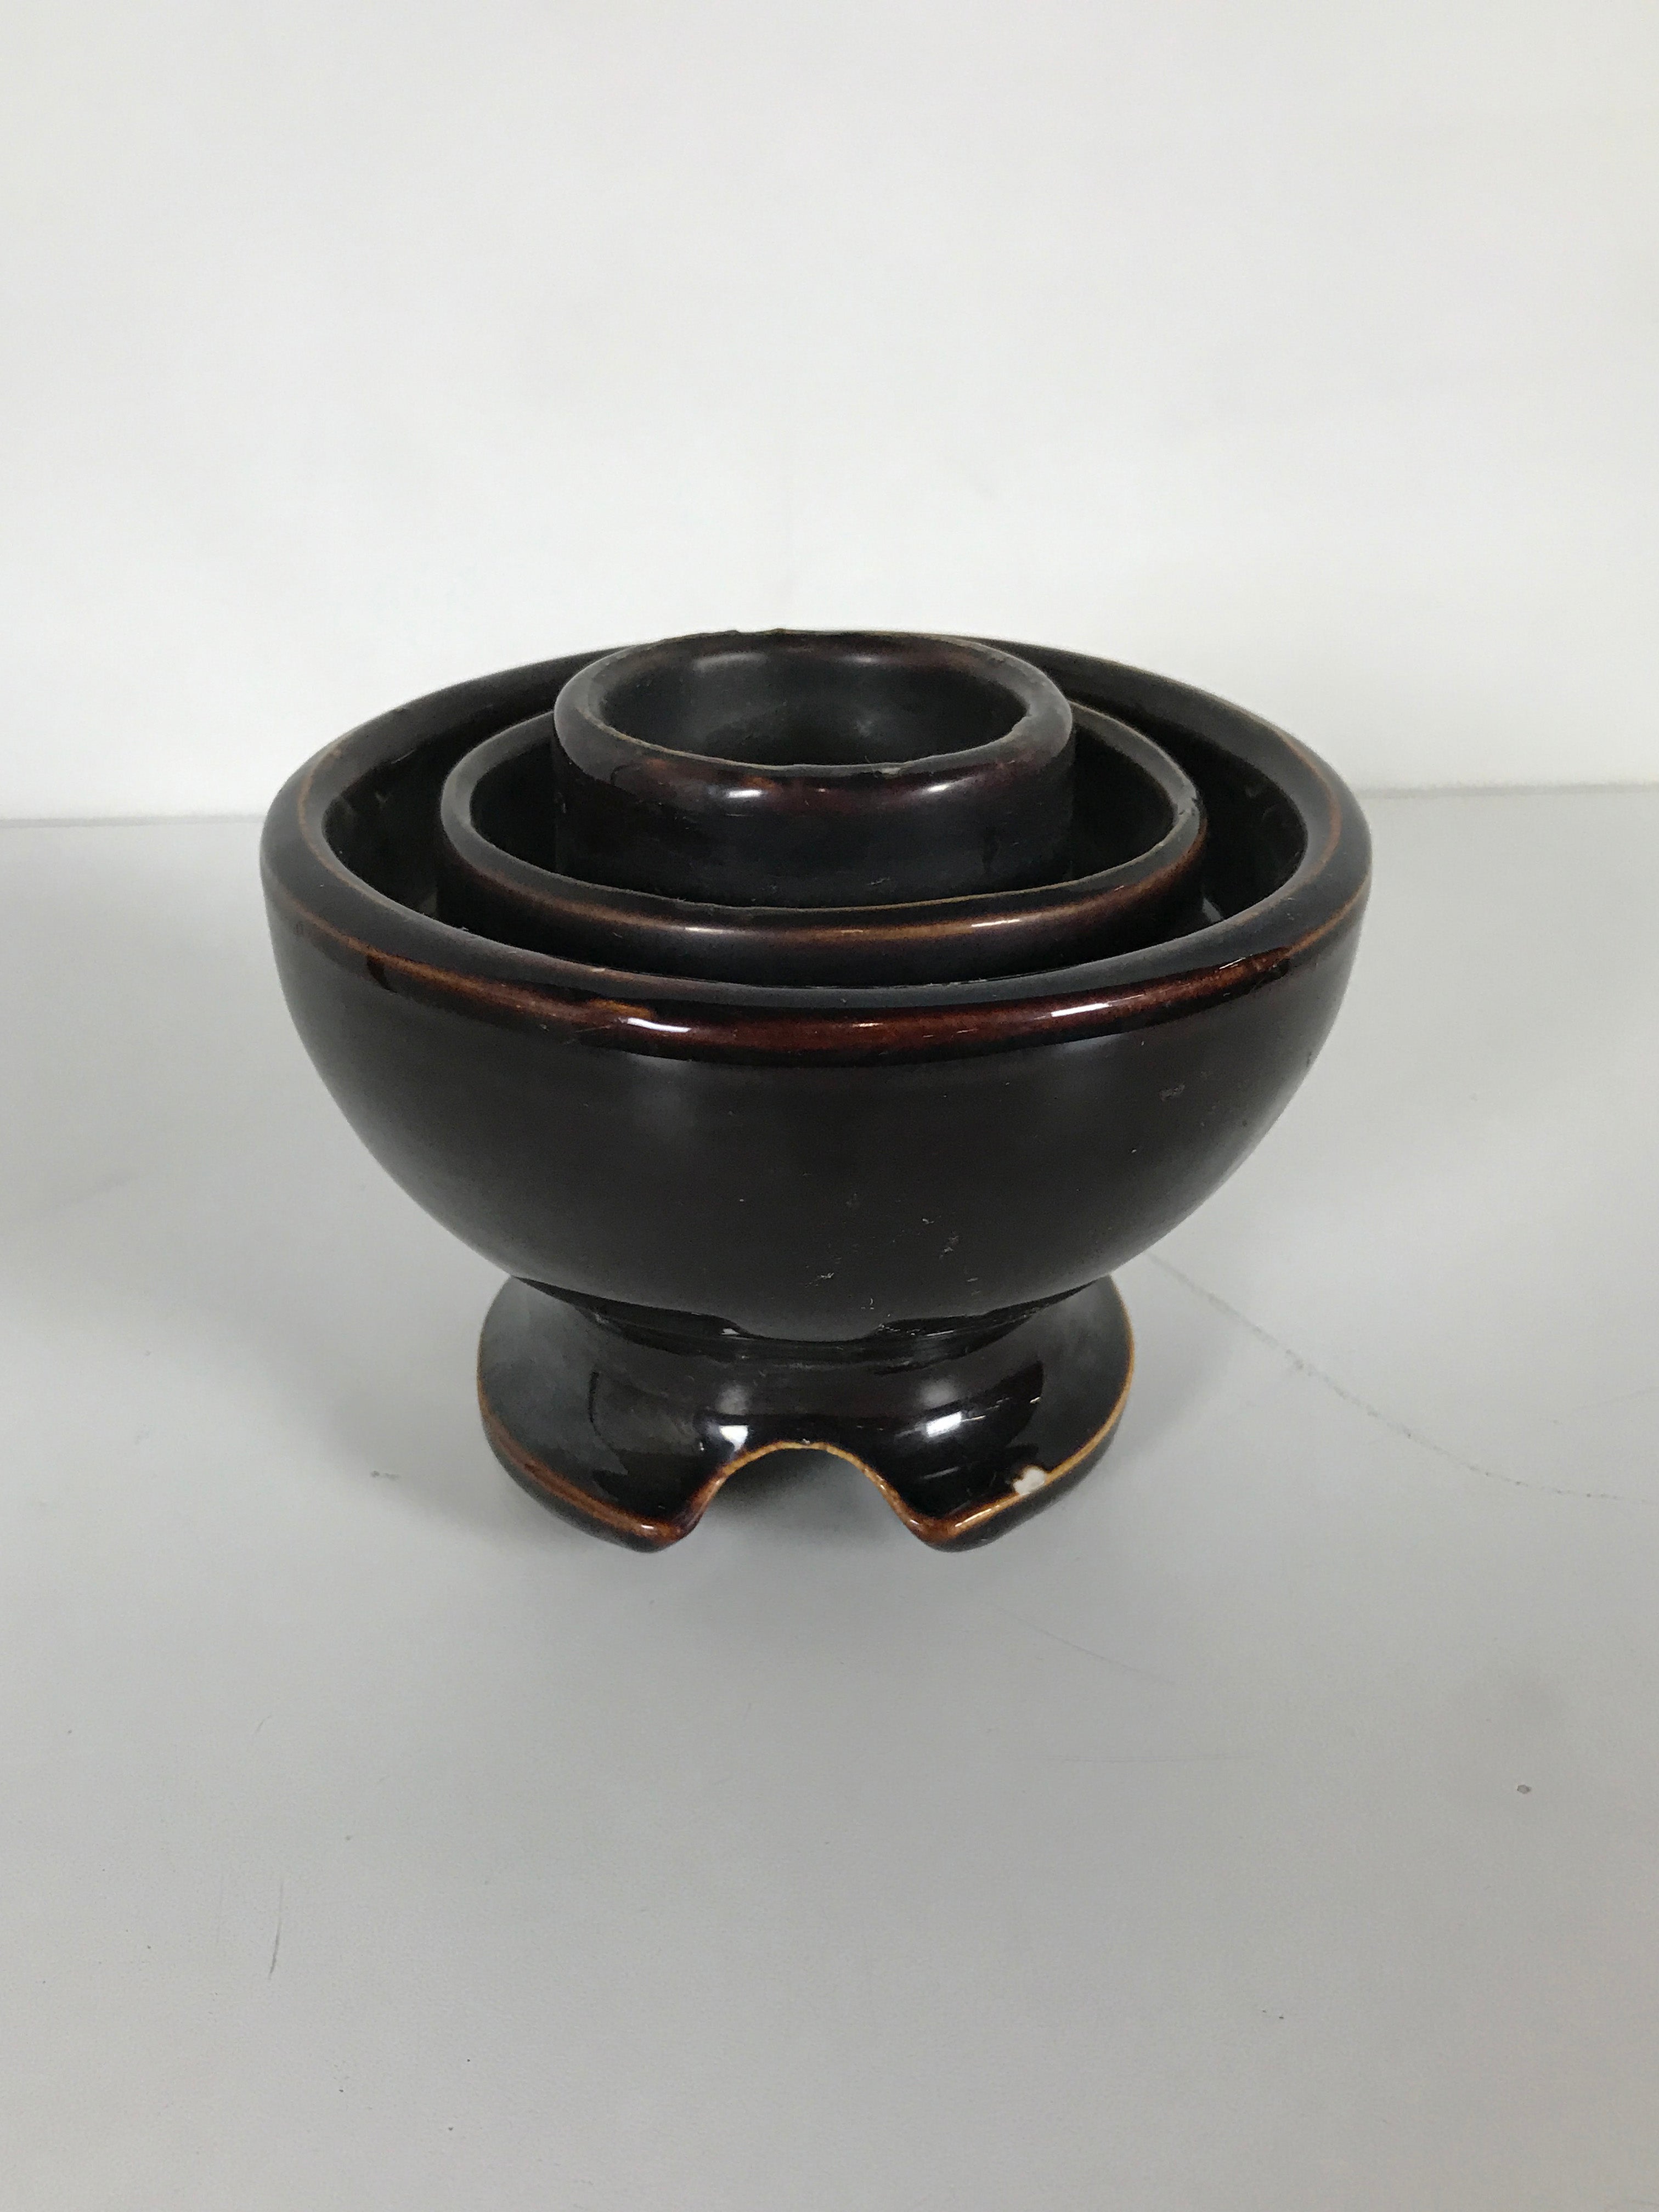 Antique Large Dark Brown Ceramic Insulator with White Top